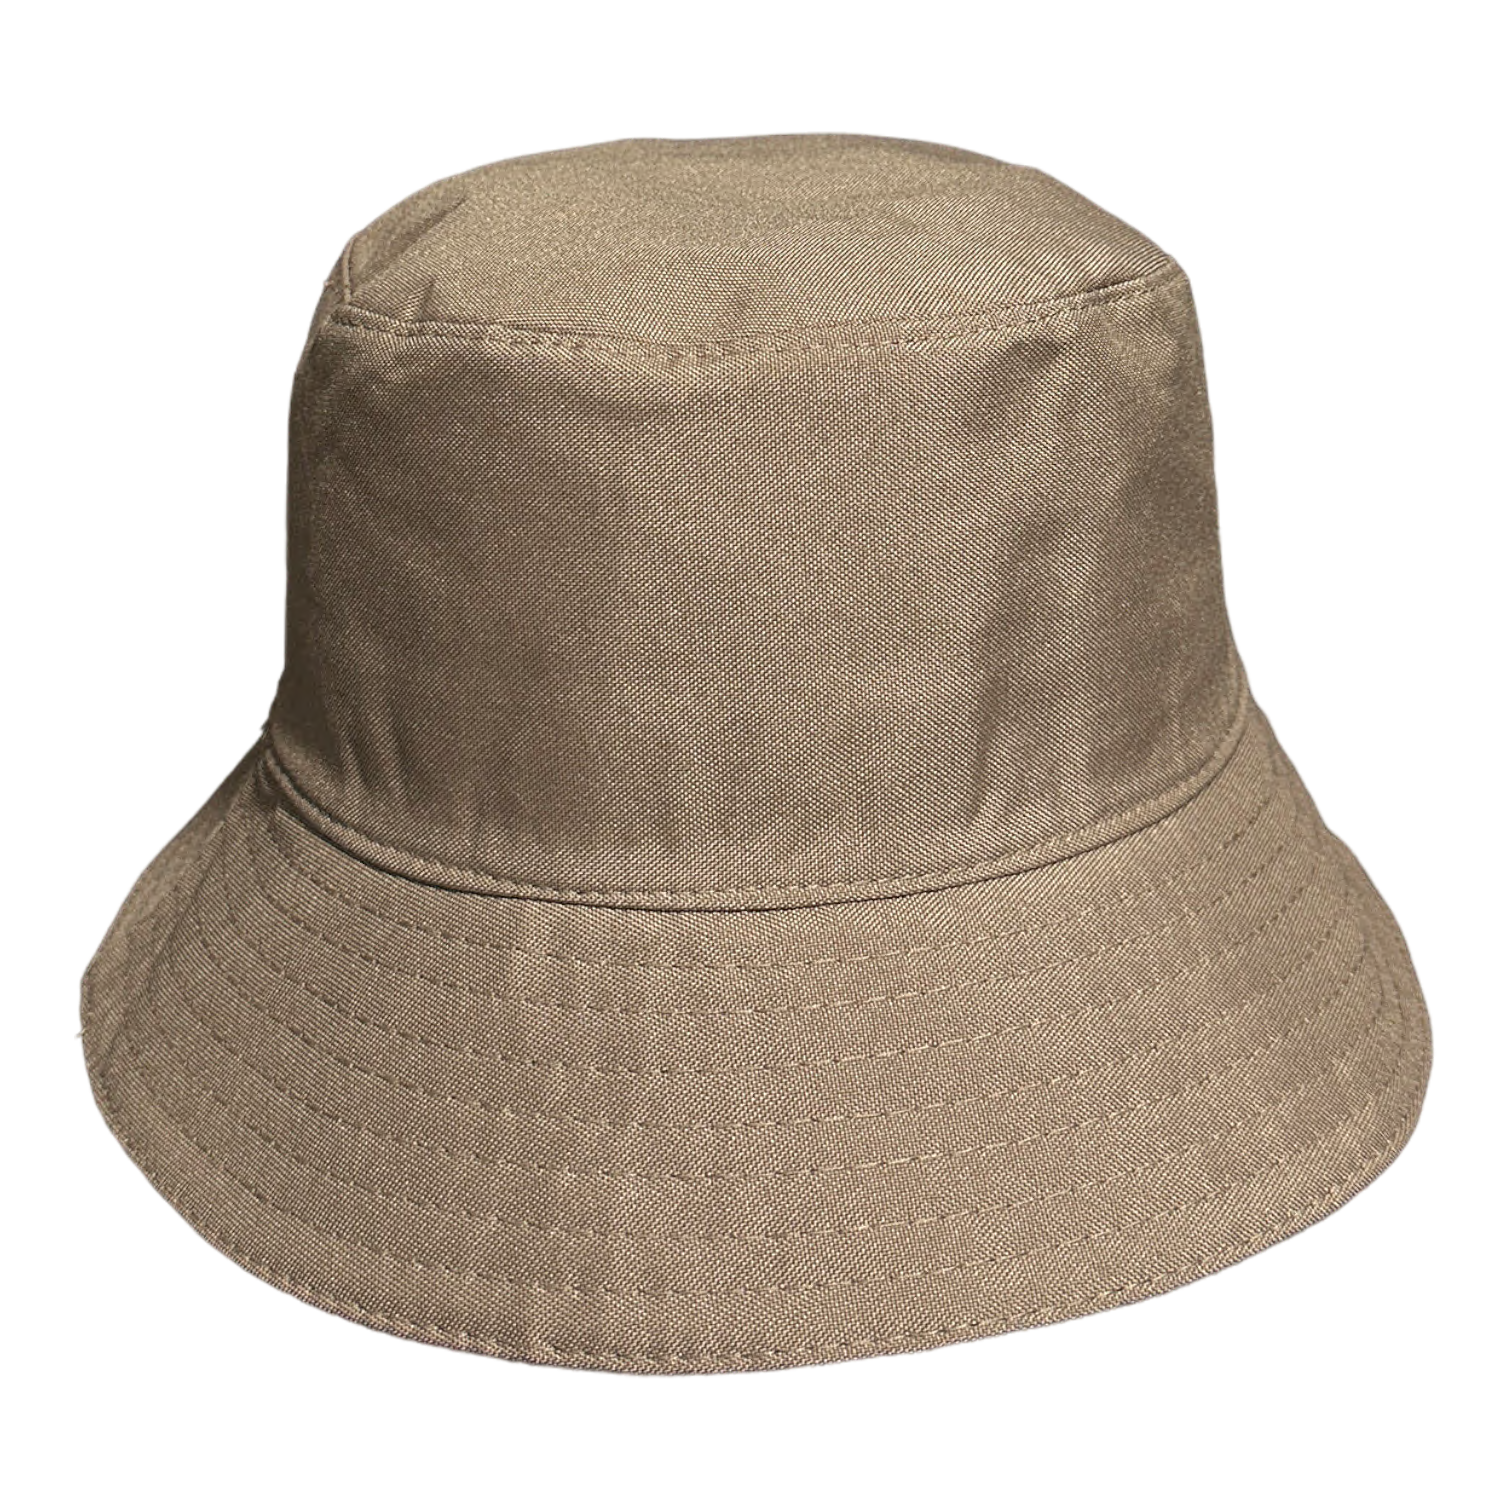 BUCKET HAT